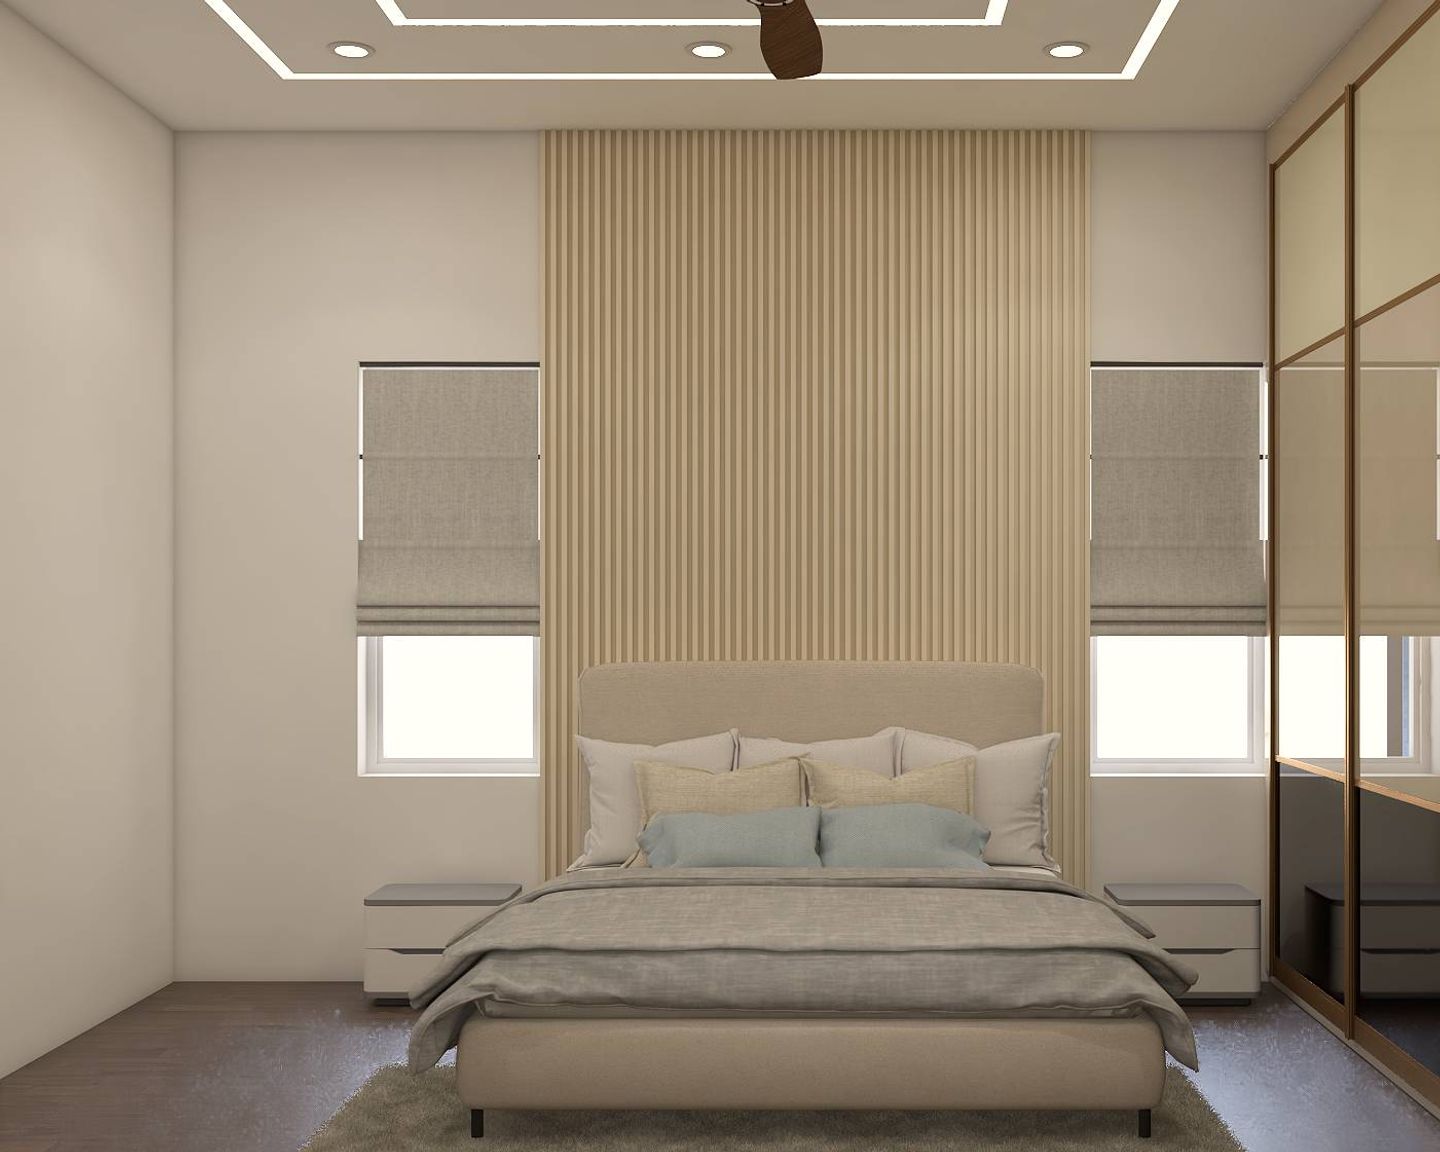 11x10 Feet Guest Room Design - Livspace